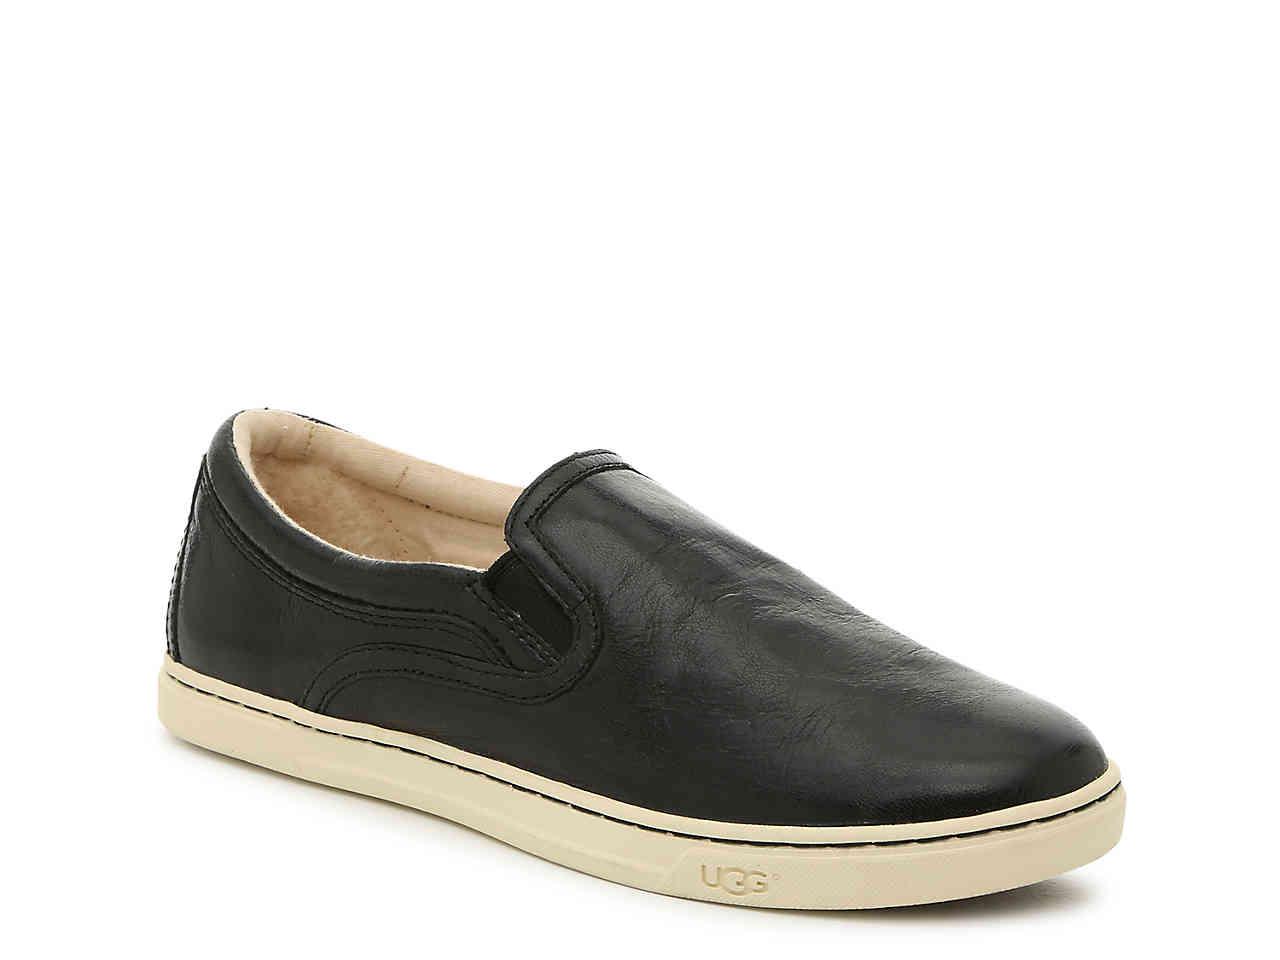 UGG Leather Kitlyn Slip-on Sneaker in Black - Lyst